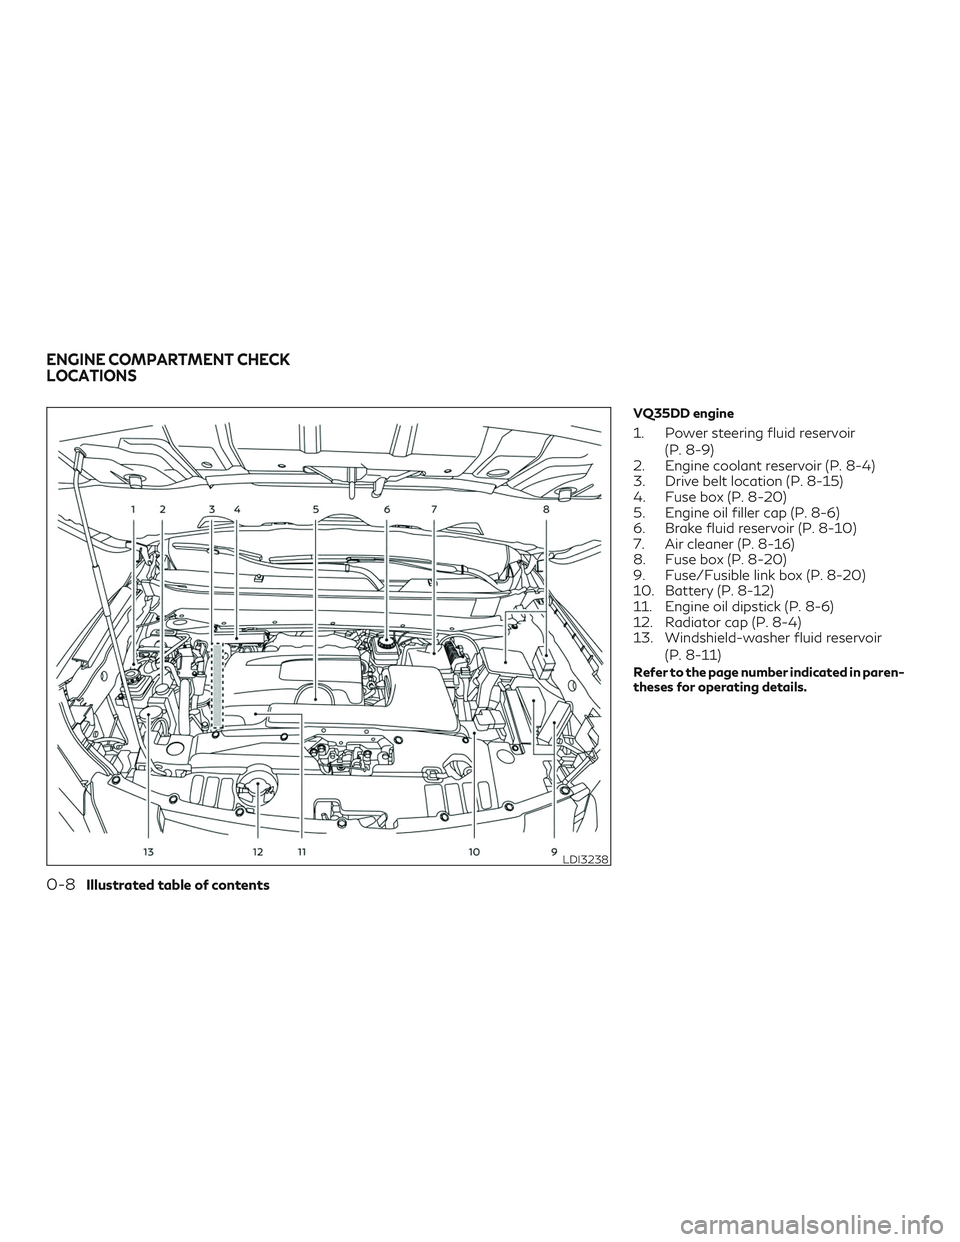 INFINITI QX60 2019  Owners Manual VQ35DD engine
1. Power steering fluid reservoir(P. 8-9)
2. Engine coolant reservoir (P. 8-4)
3. Drive belt location (P. 8-15)
4. Fuse box (P. 8-20)
5. Engine oil filler cap (P. 8-6)
6. Brake fluid res